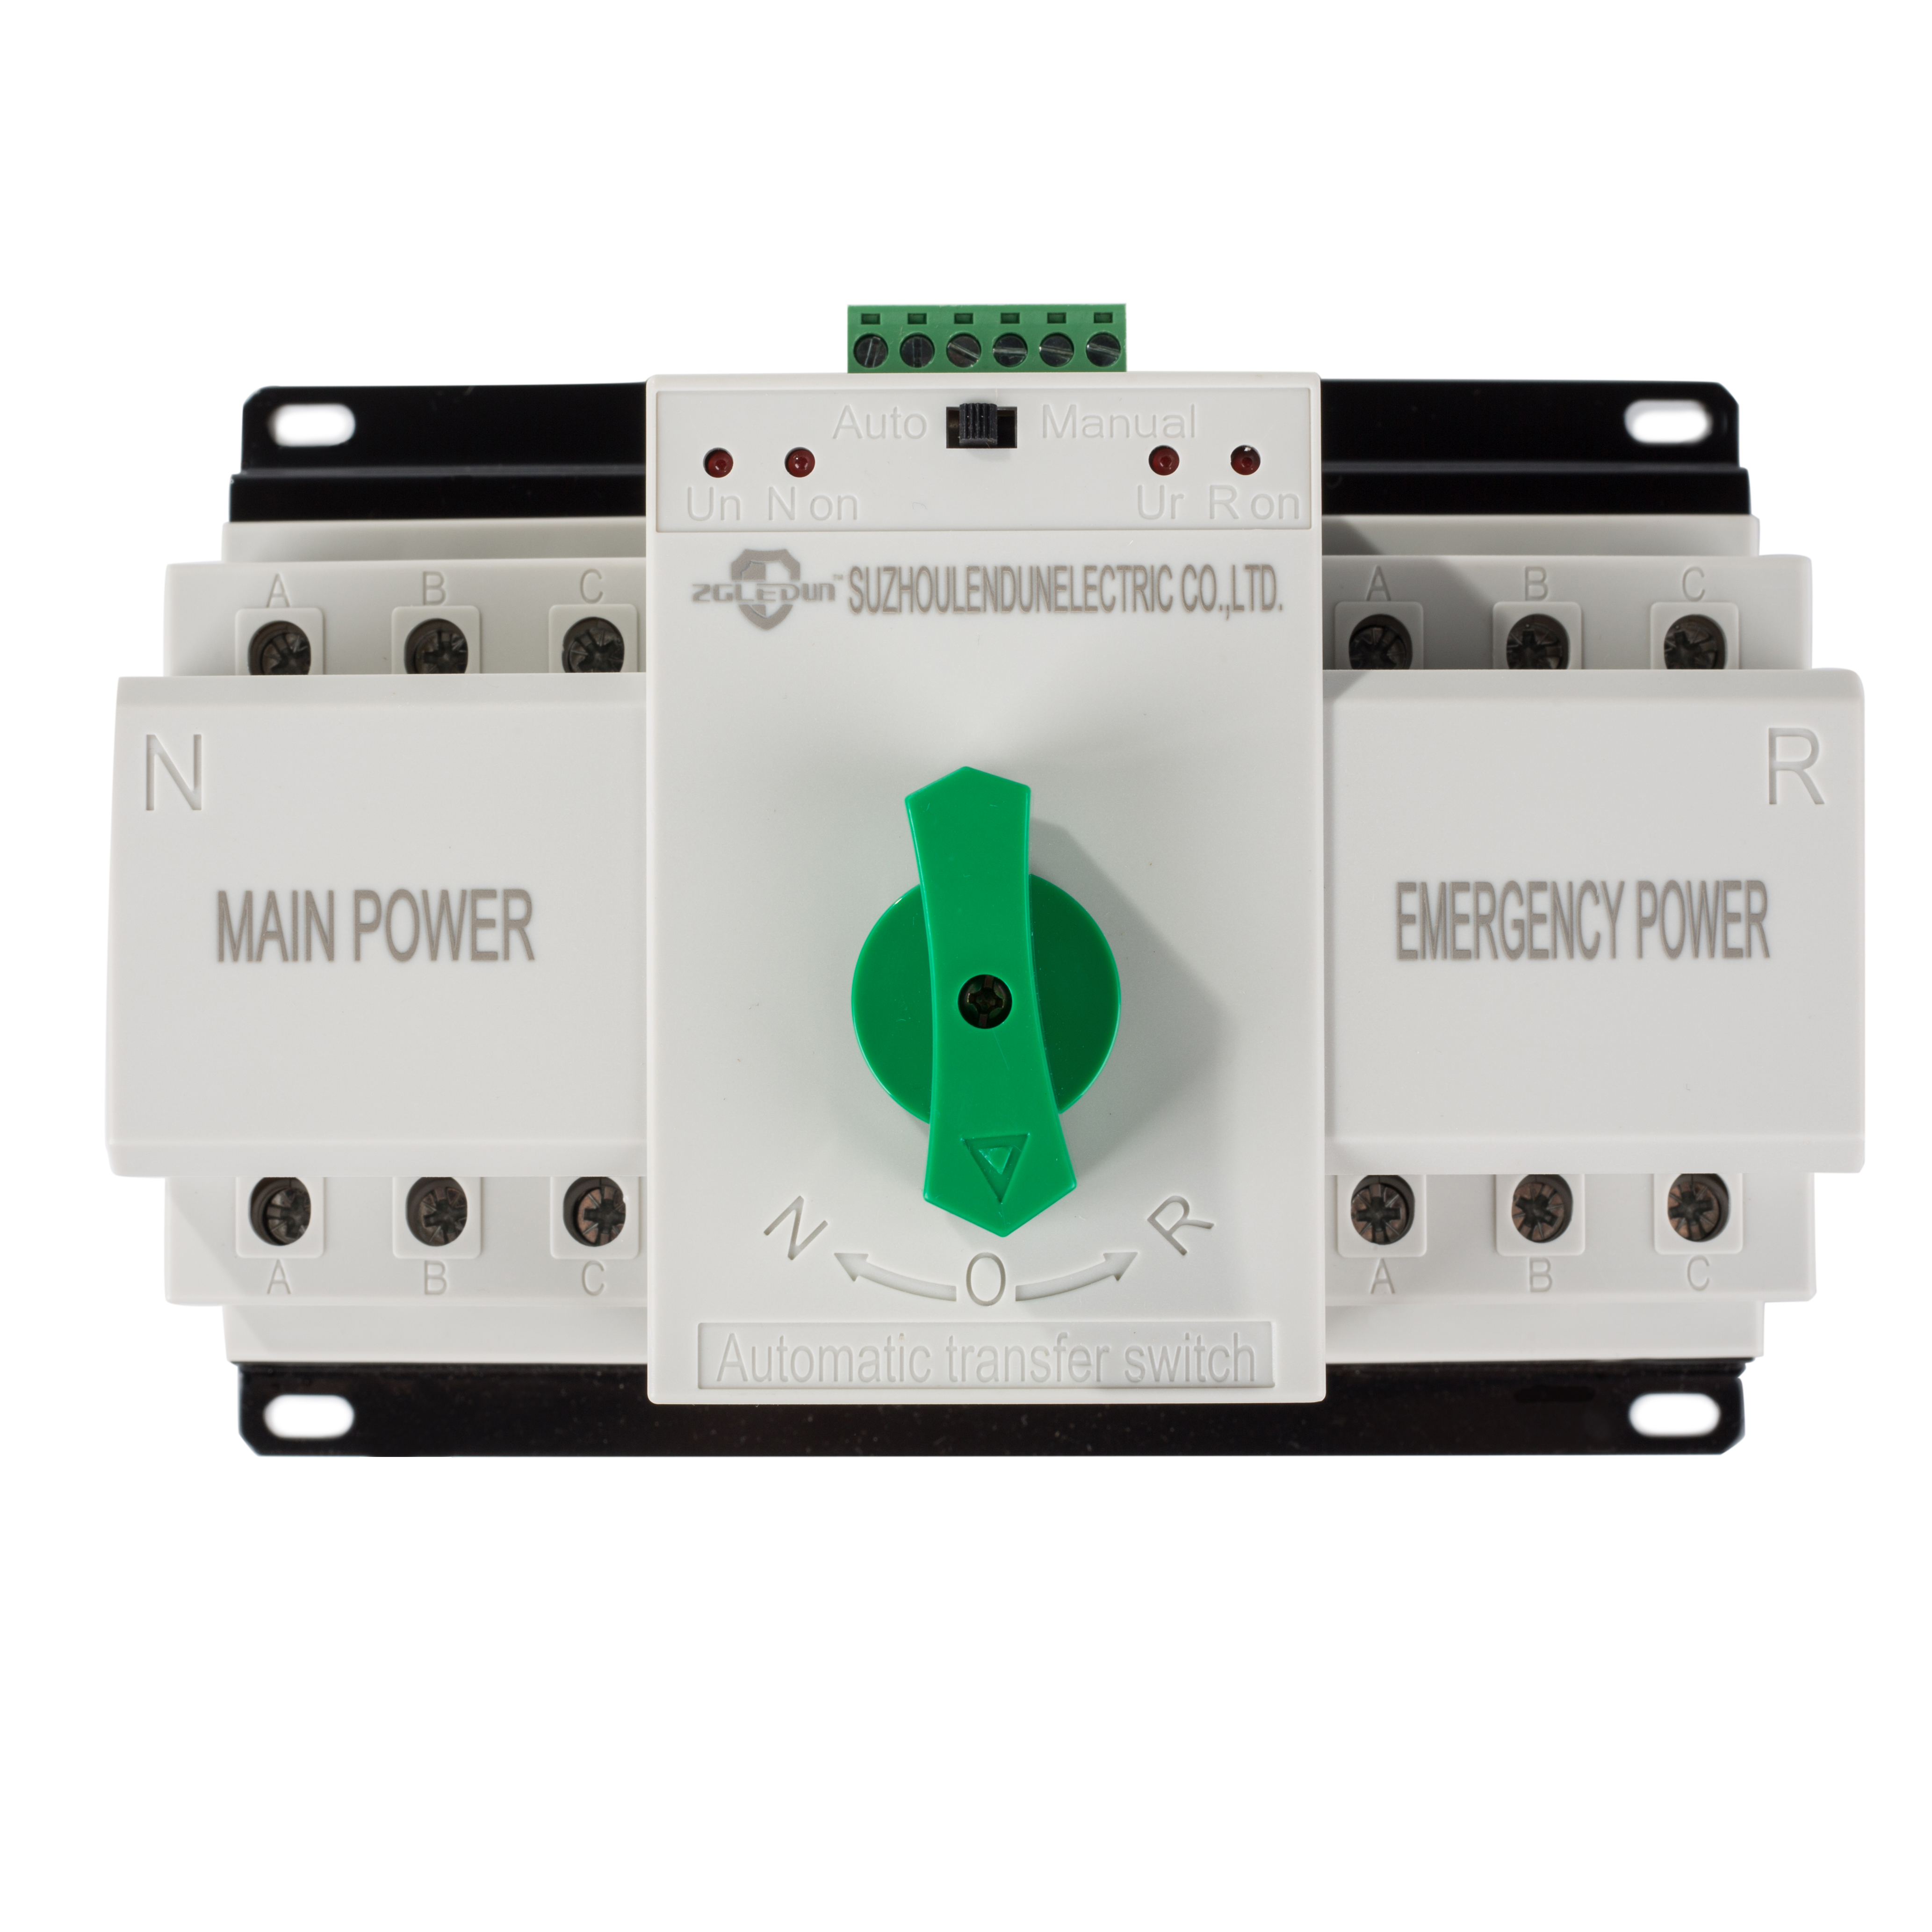 CB Level Mini Dual Power አውቶማቲክ የማስተላለፊያ መቀየሪያ፣ ATSE 2P፣3P፣4P 63A፣Intelligent Change-over Switch ተለይቶ የቀረበ ምስል